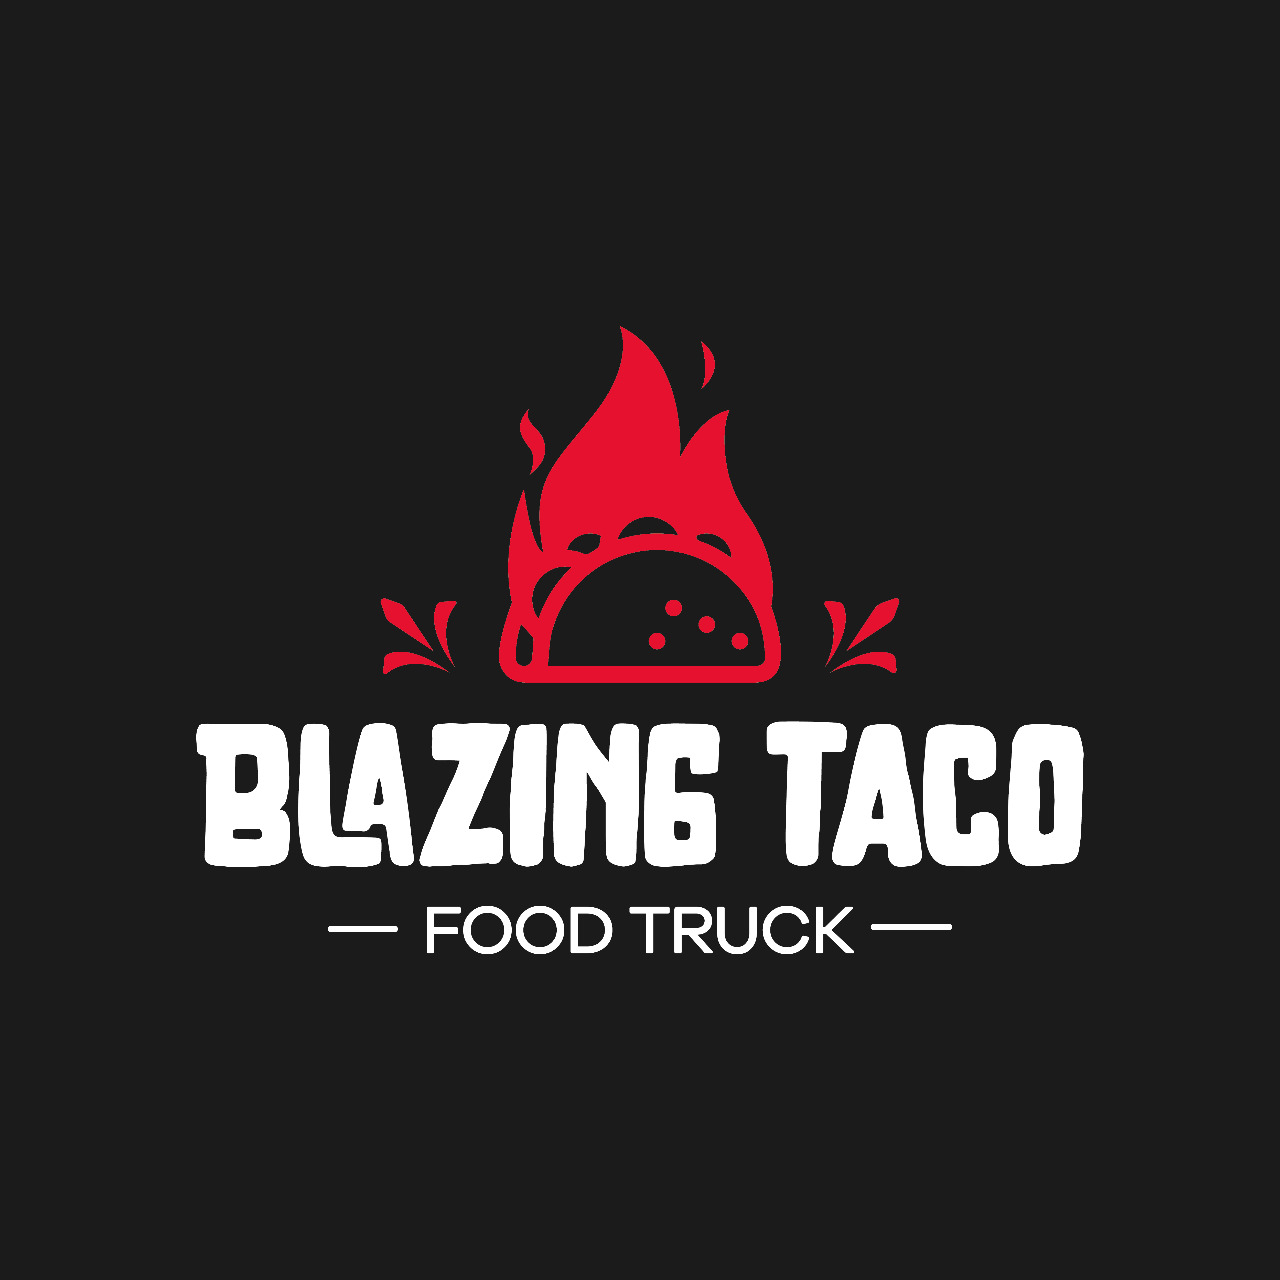 Blazing Taco Food Truck